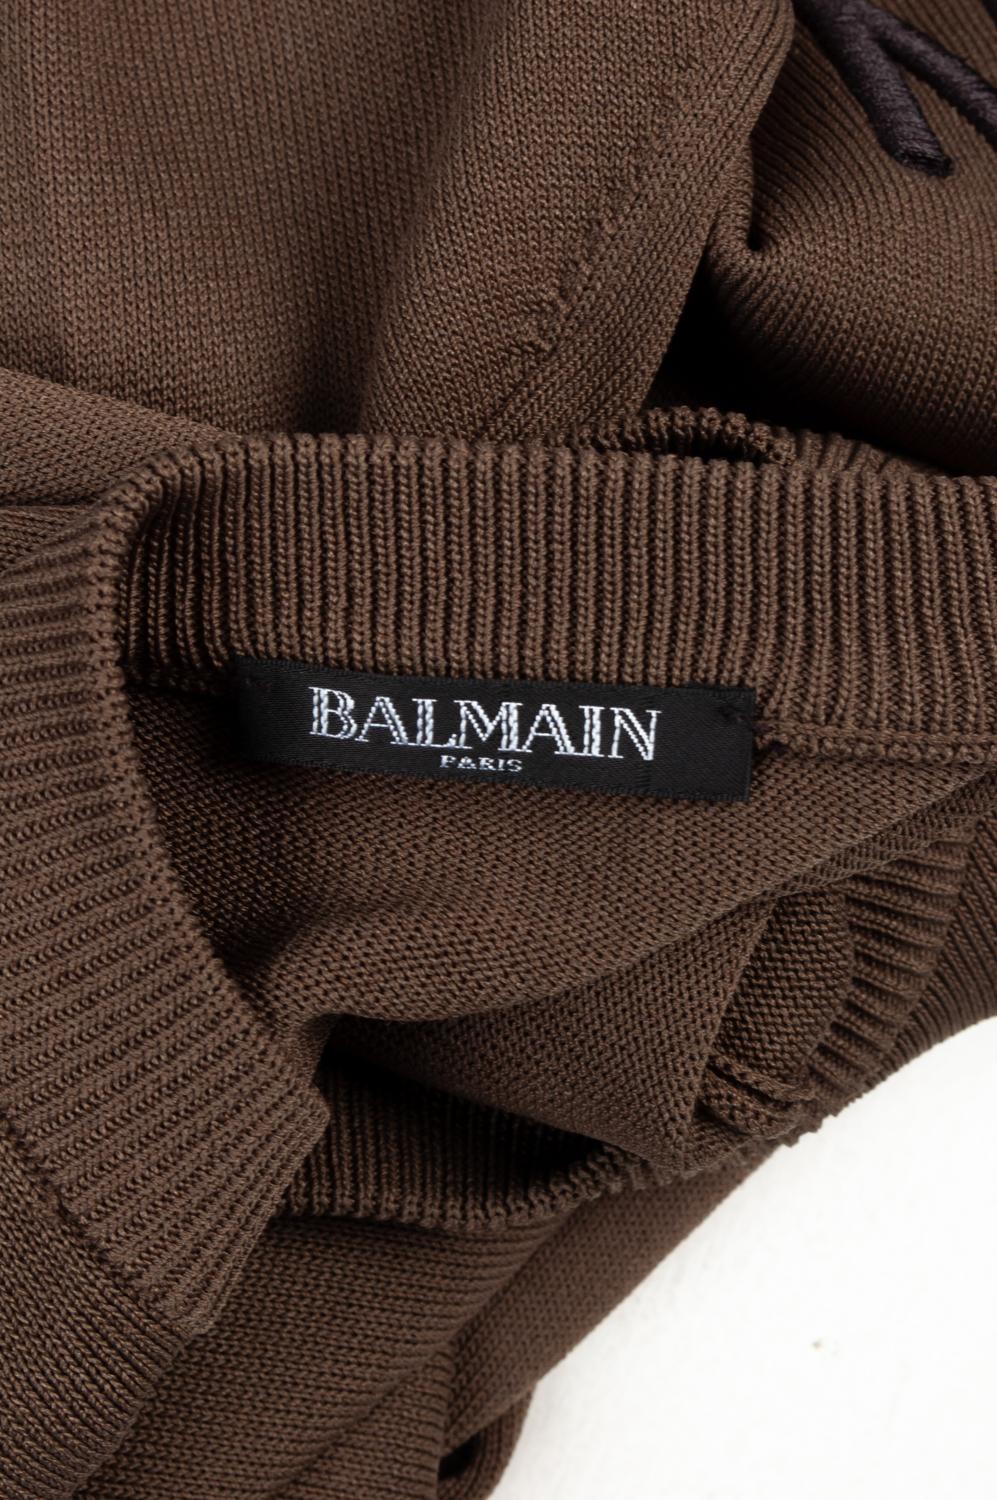 Balmain Men Sweater Crew Neck Size S/M, S606 For Sale 1